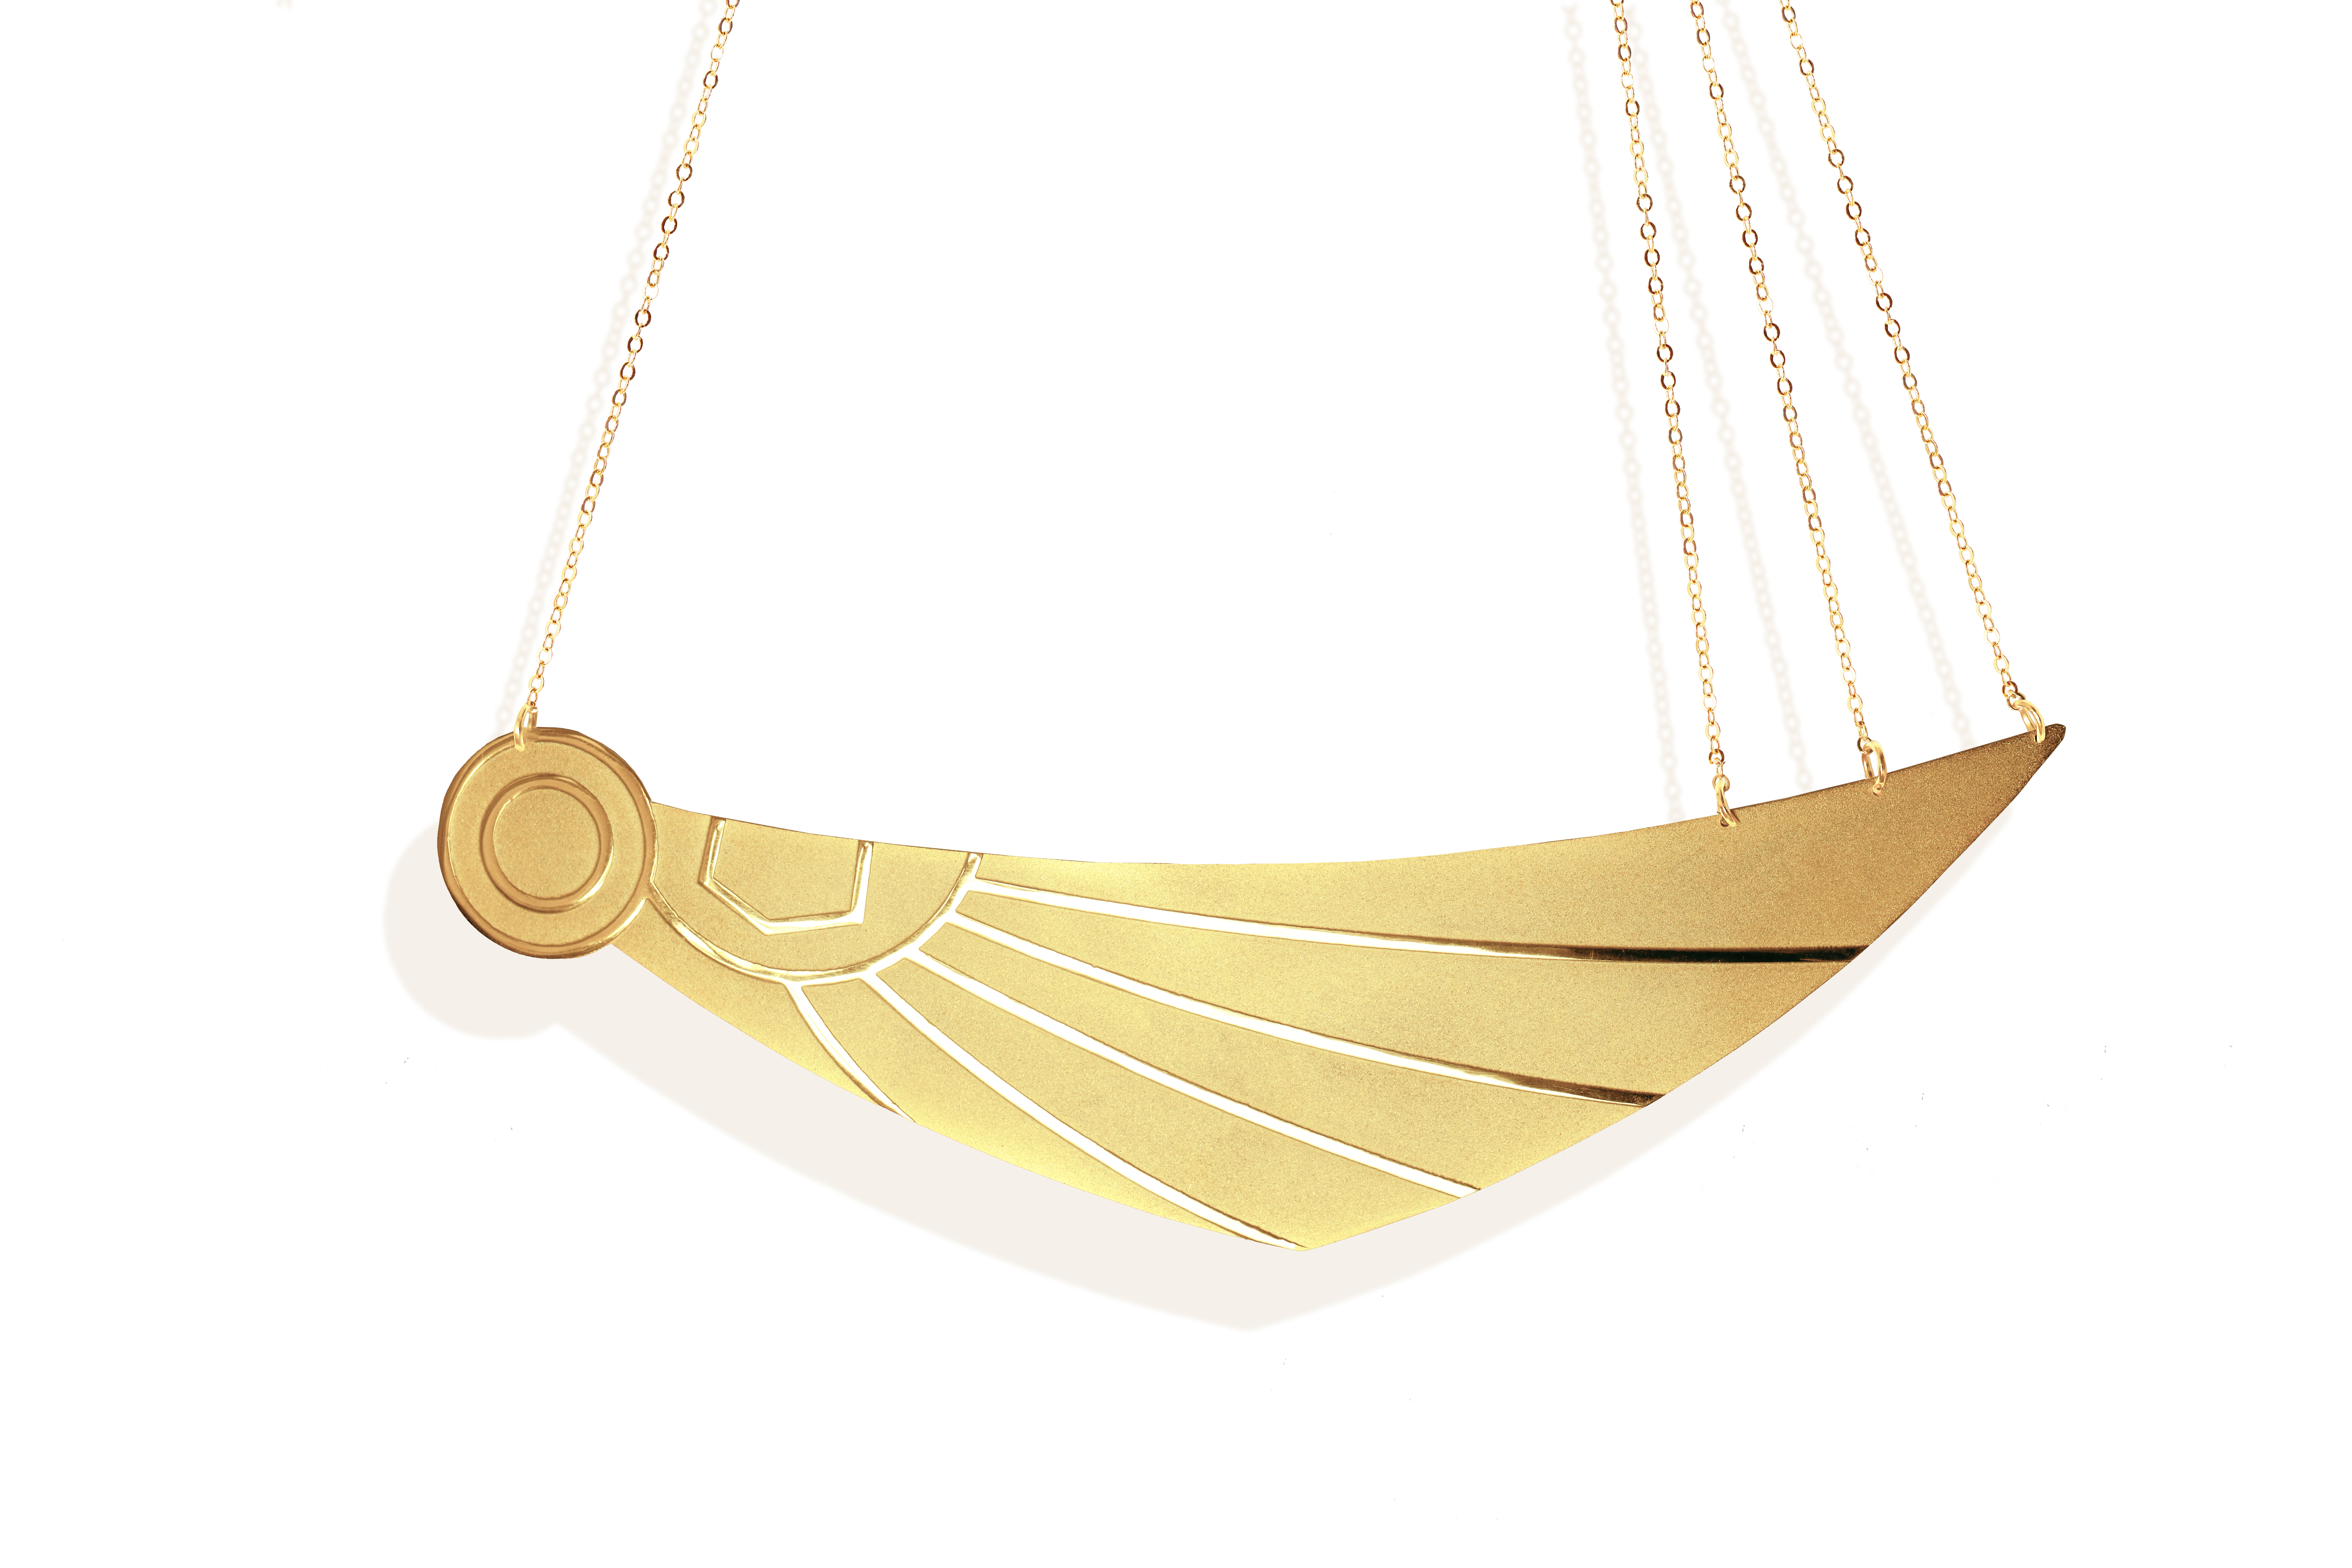 Horus wing necklace (mix matt _ shiny 18k gold plated finish )